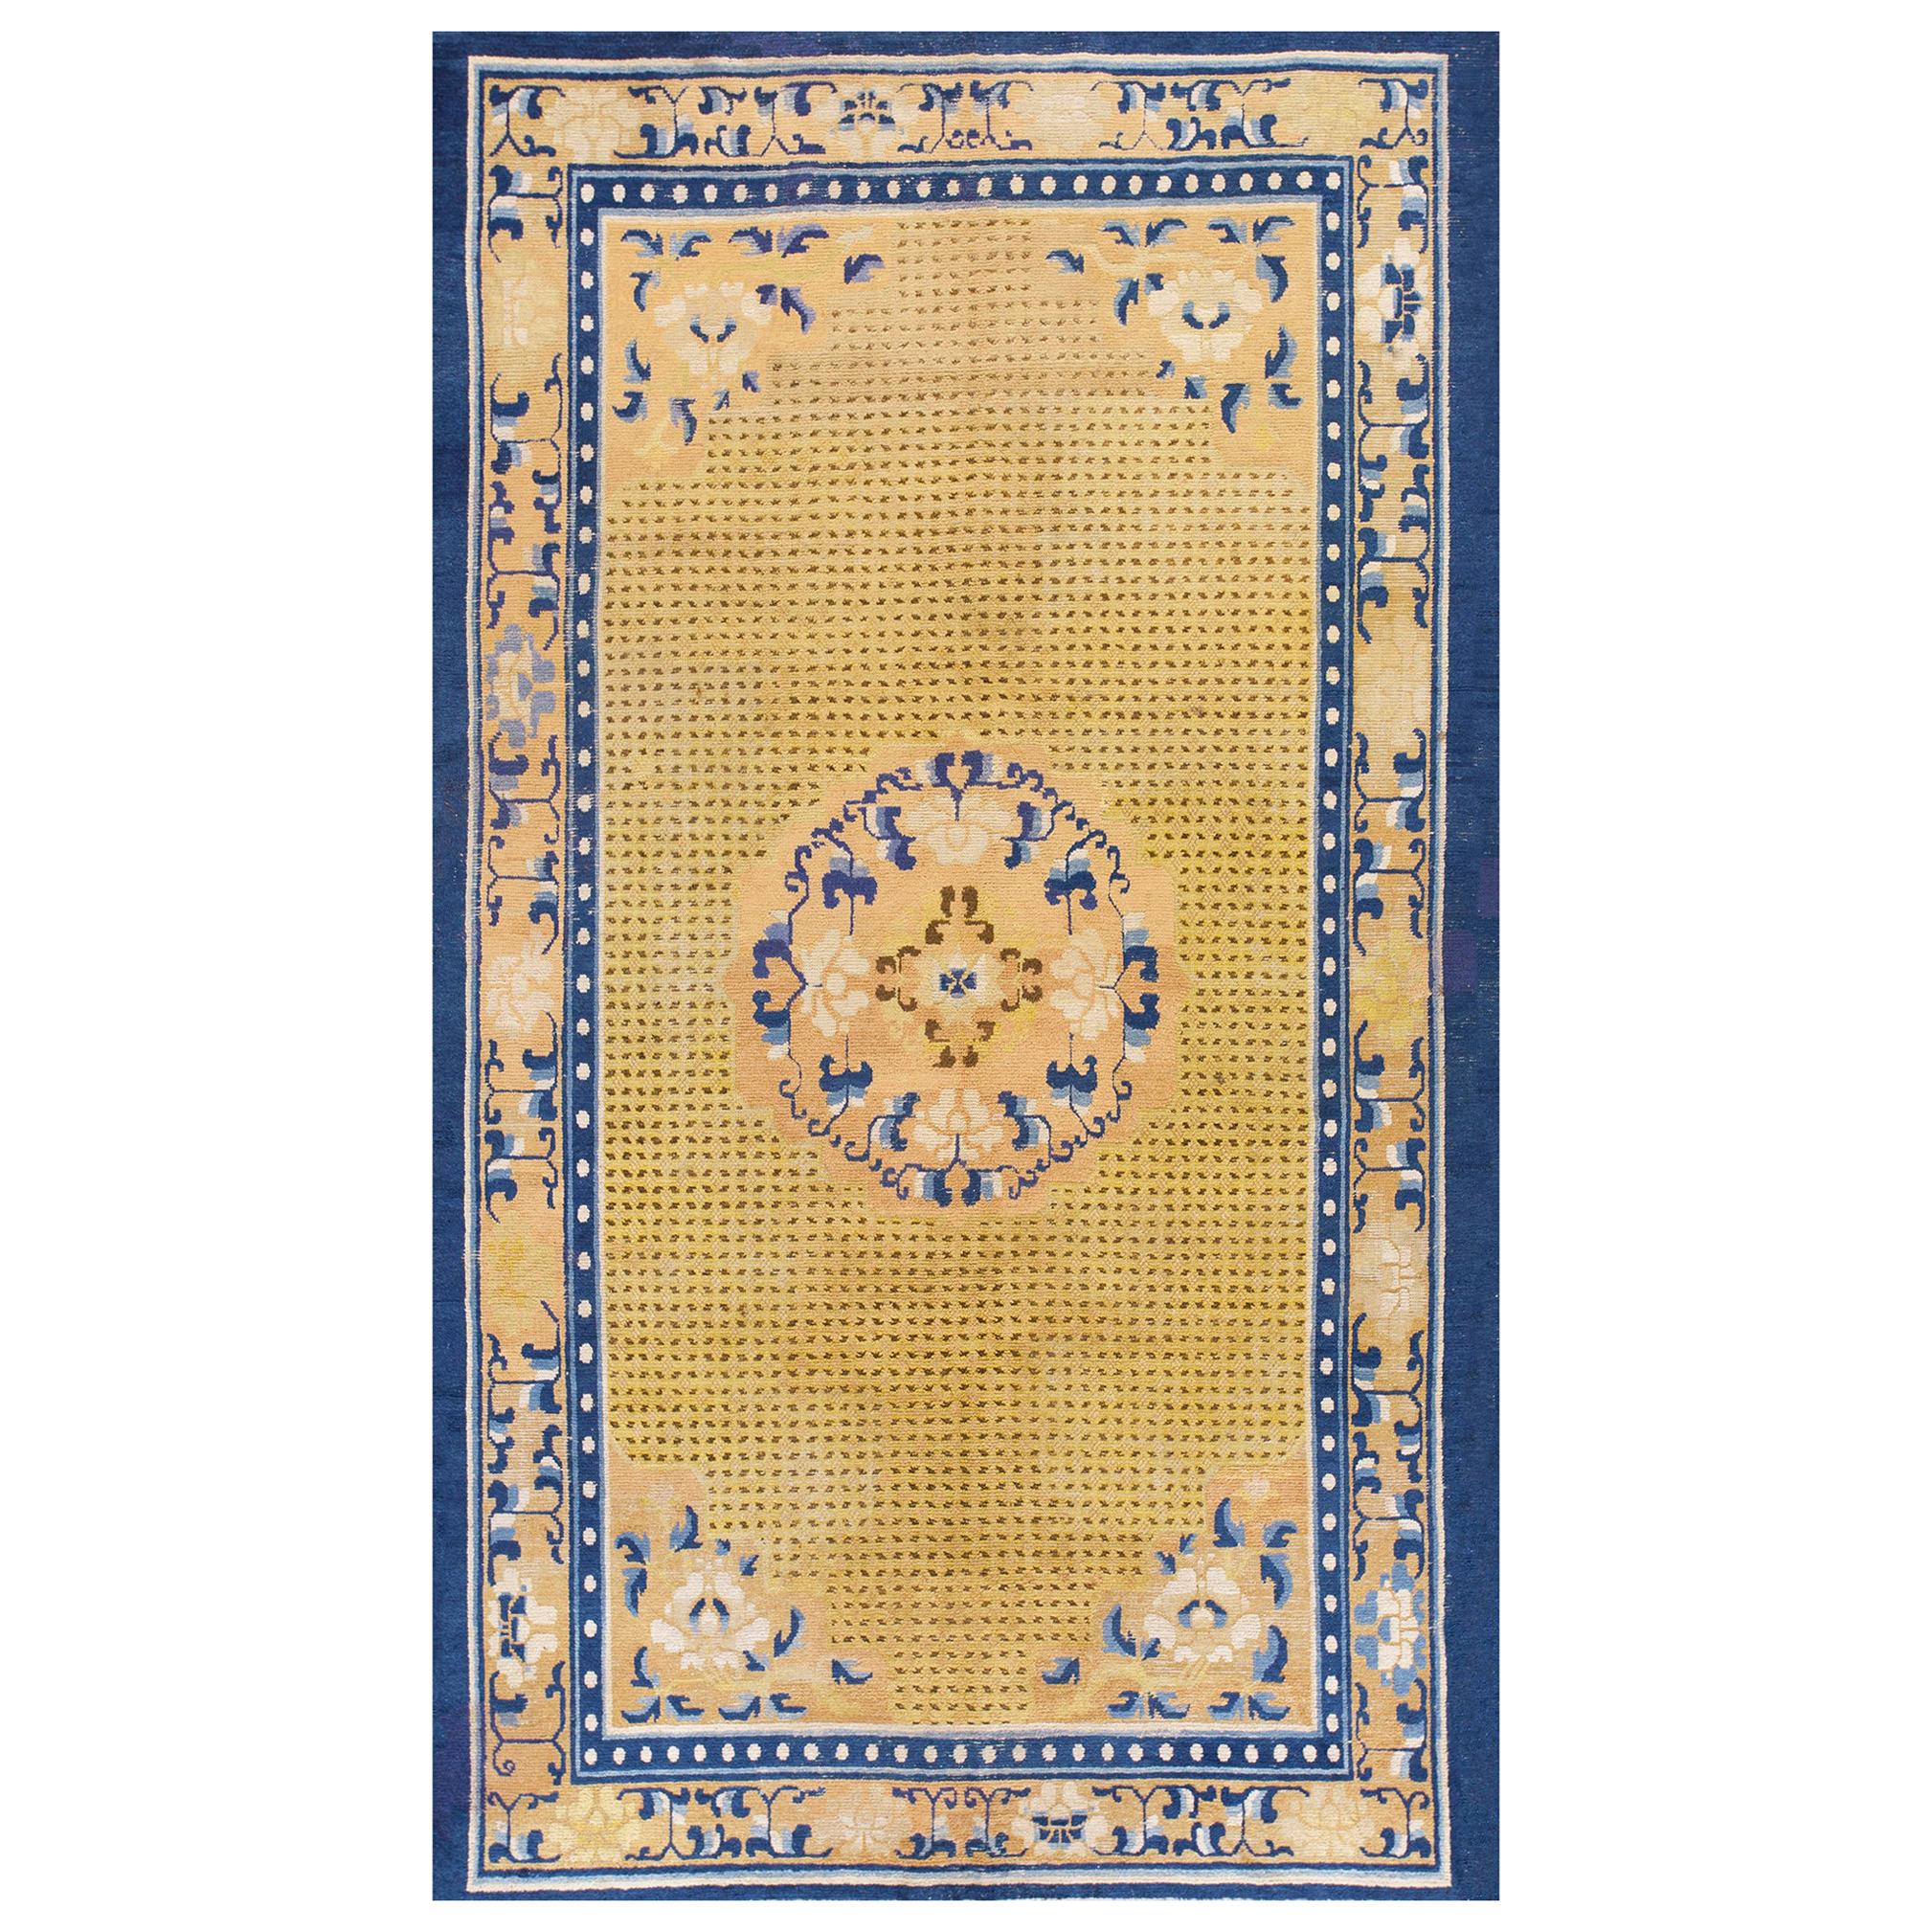 Late 18th Century Chinese Ningxia Kang Carpet ( 6' x 10'3" - 175 x 415 )